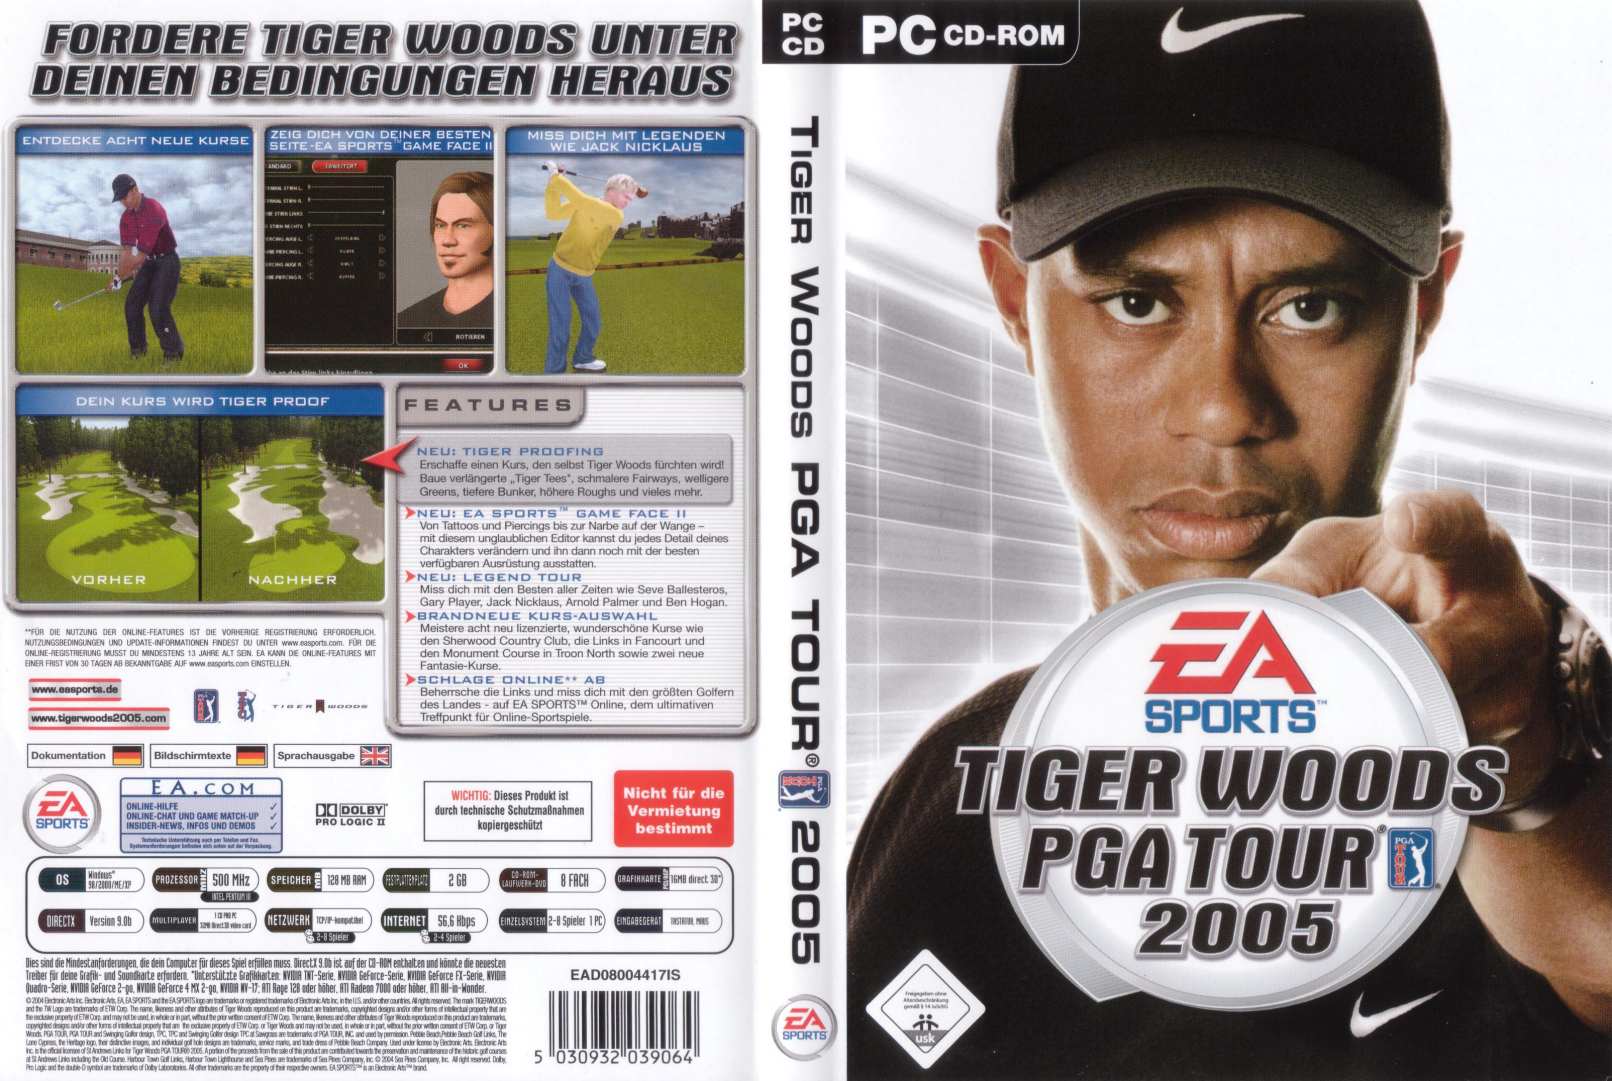 Tiger Woods PGA Tour 2005 - DVD obal